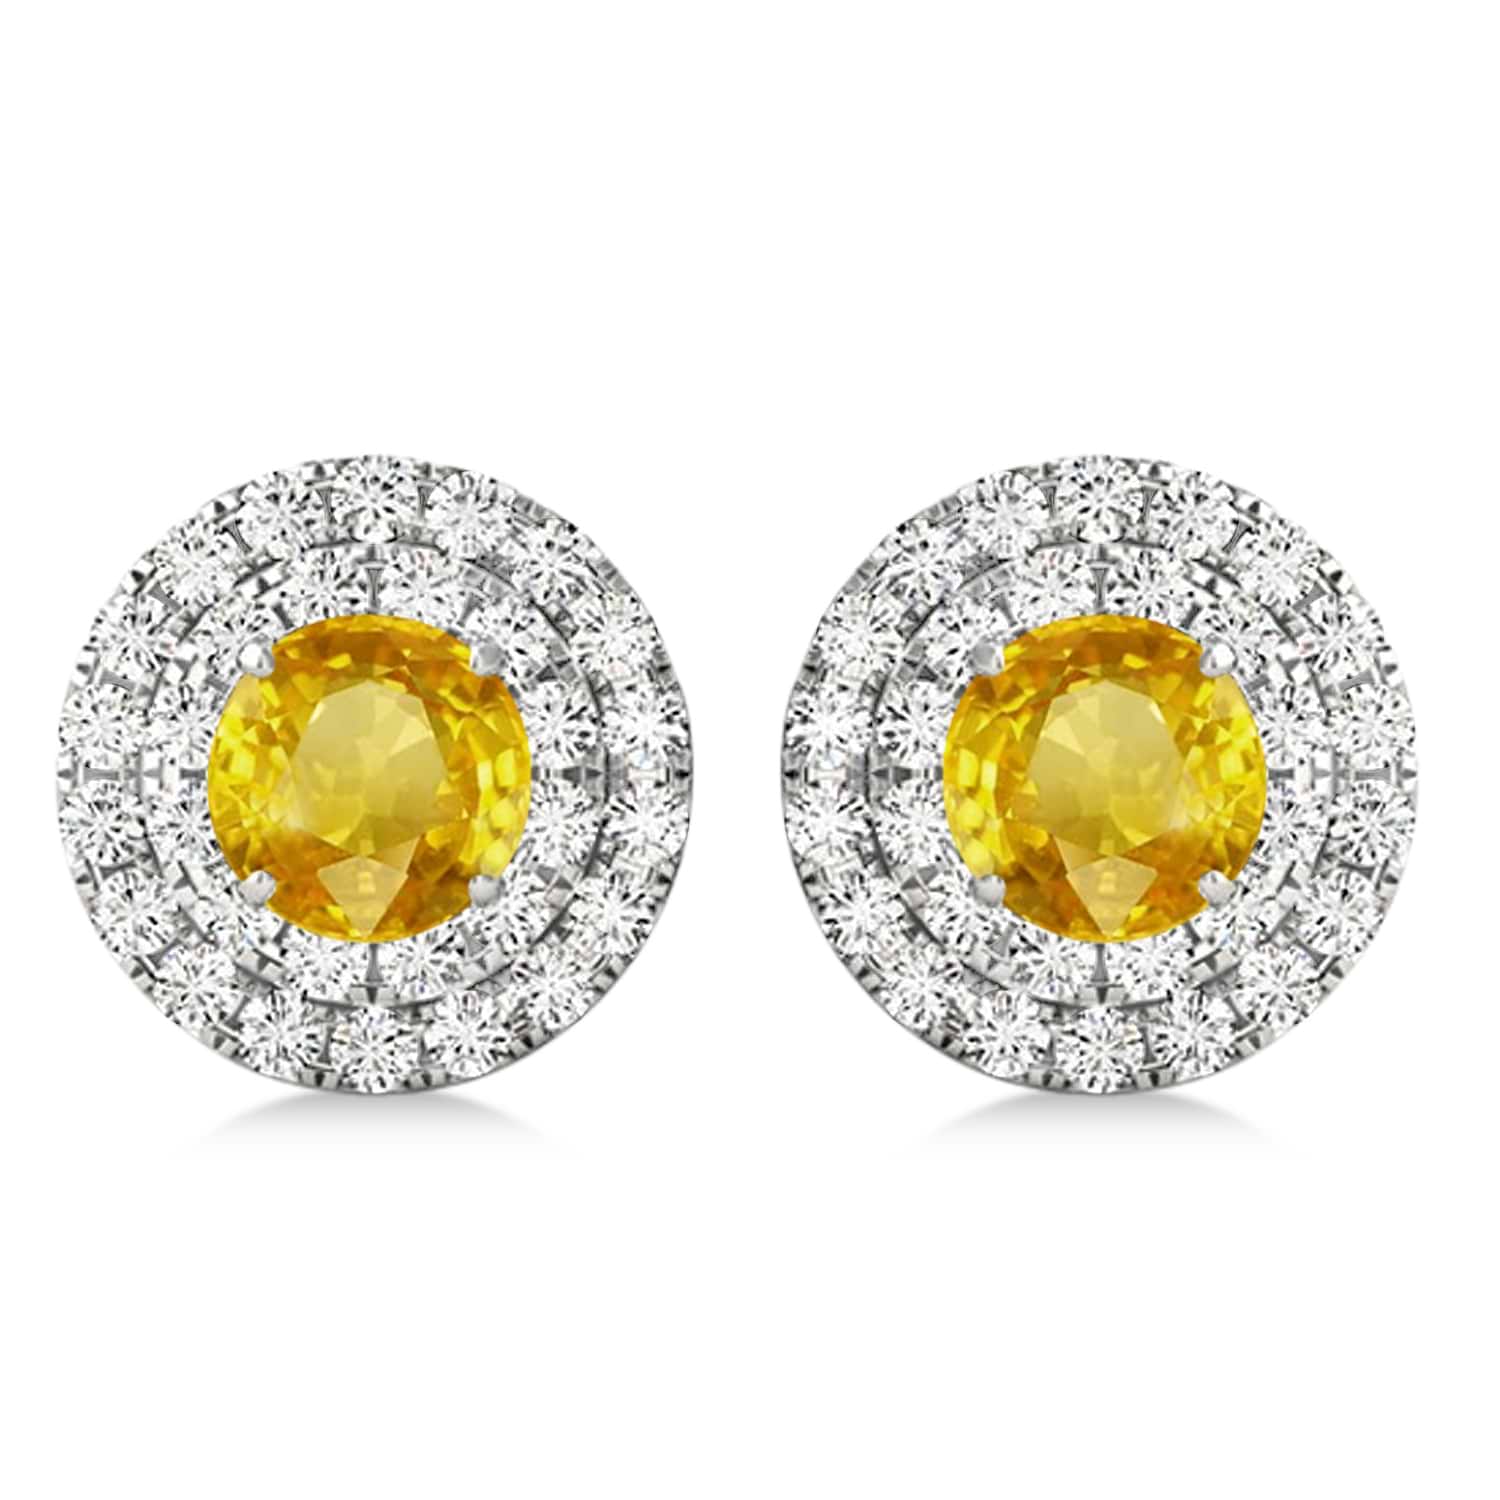 Round Double Halo Diamond & Yellow Sapphire Earrings 14k White Gold 1.65ct